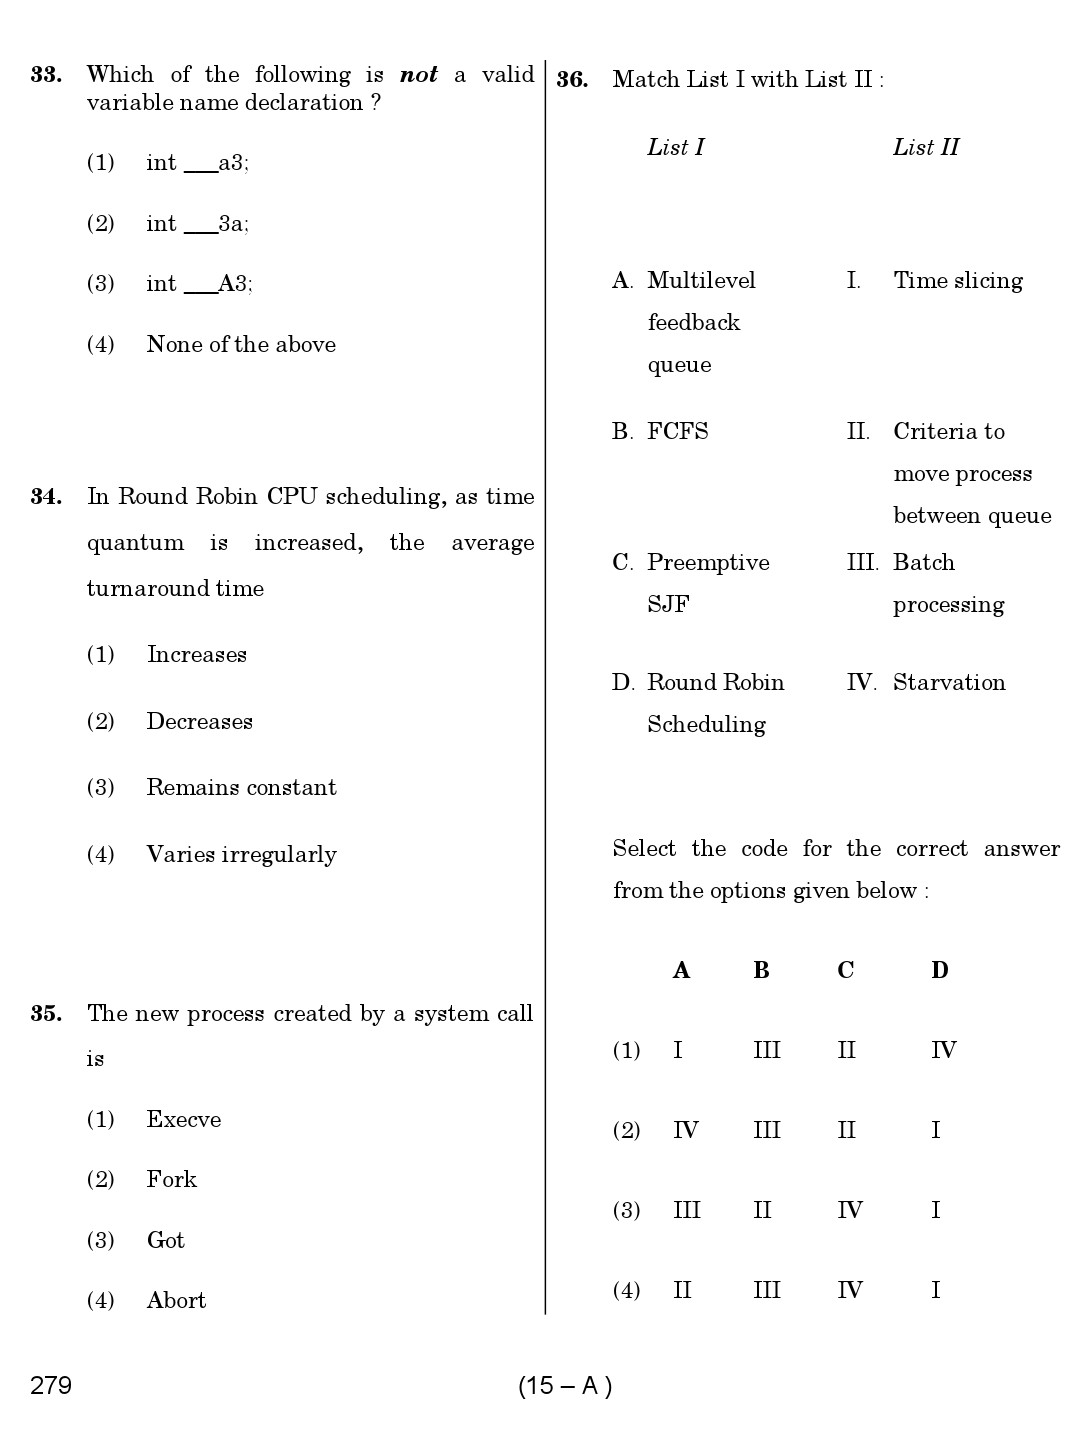 Karnataka PSC Computer Science Teachers Exam Sample Question Paper Subject code 279 15